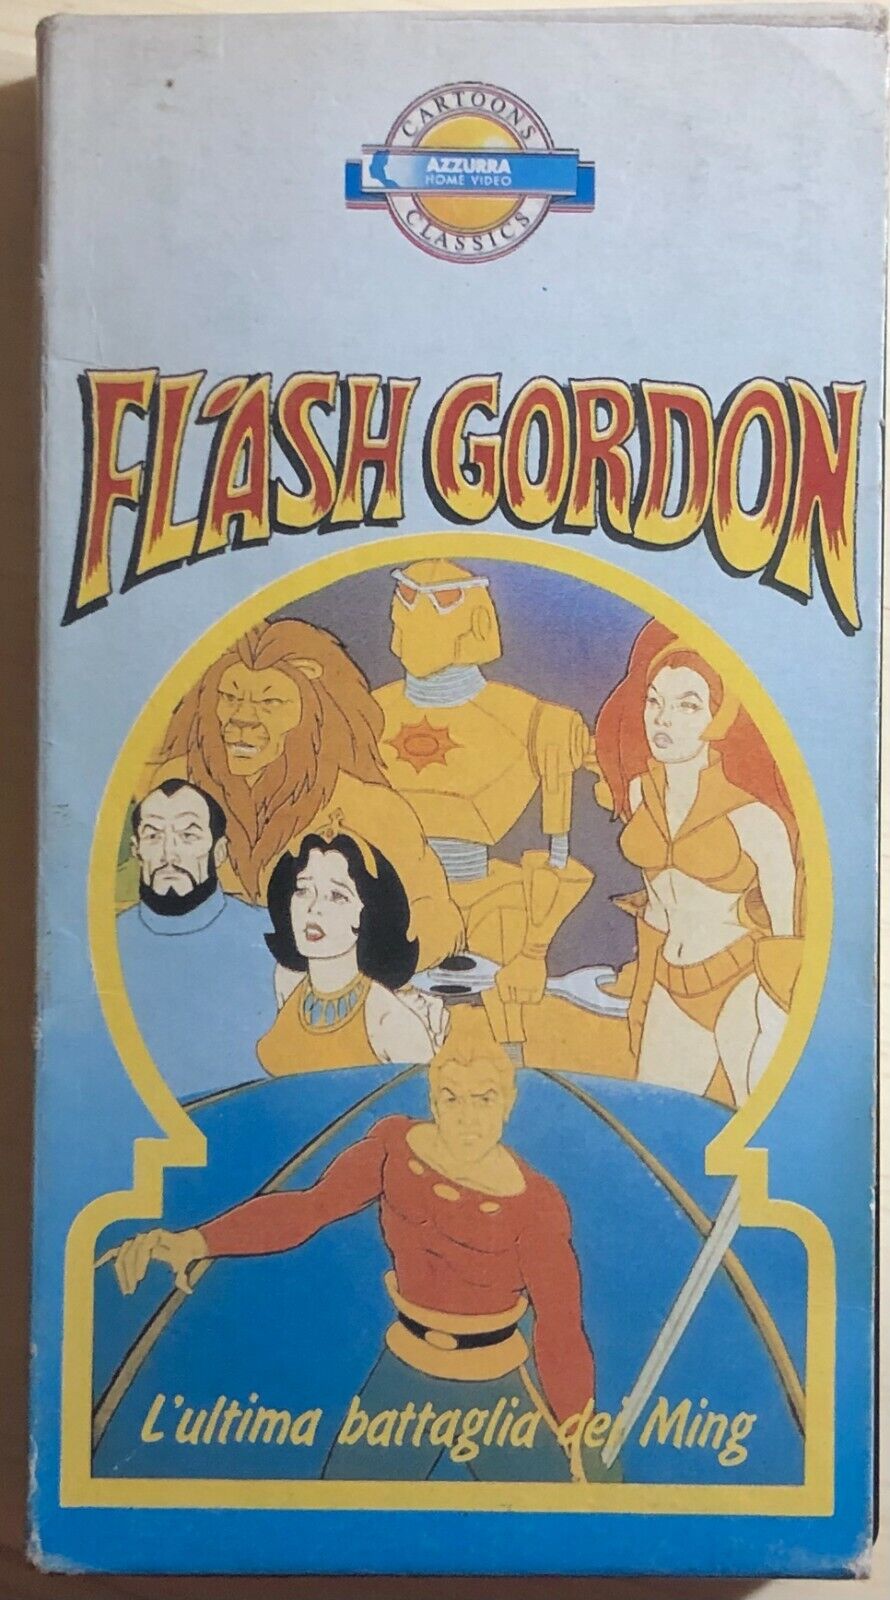 Flash Gordon - L'ultima battaglia dei Ming VHS di Aa.vv.,  1988,  Azzurra Home V